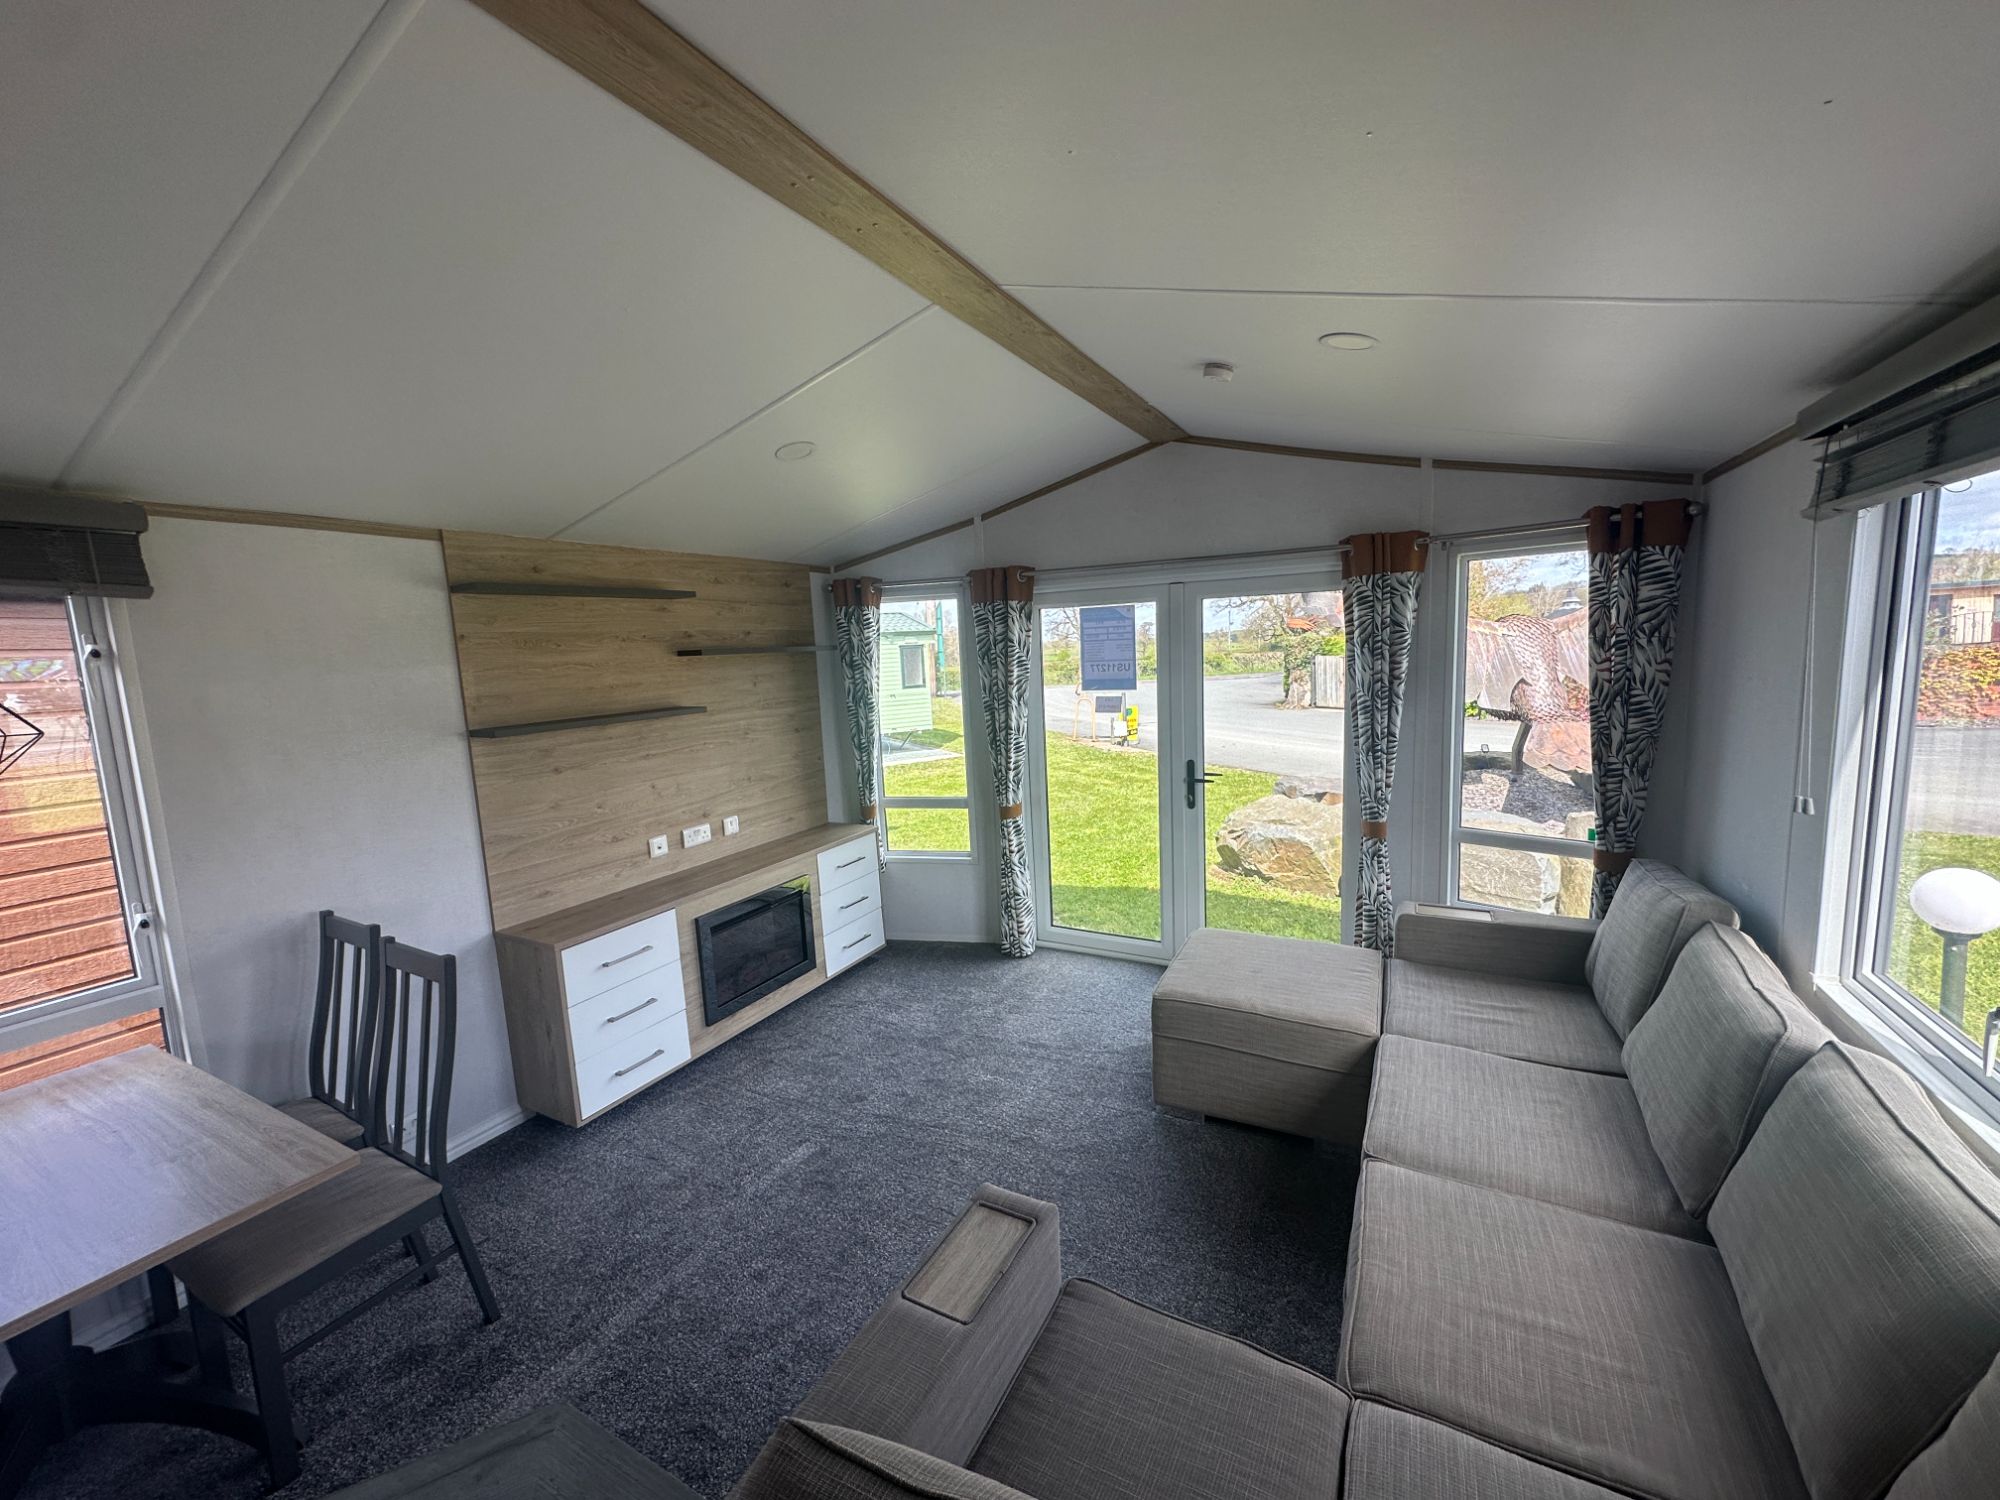 2021 Atlas Style Lodge Lounge 1